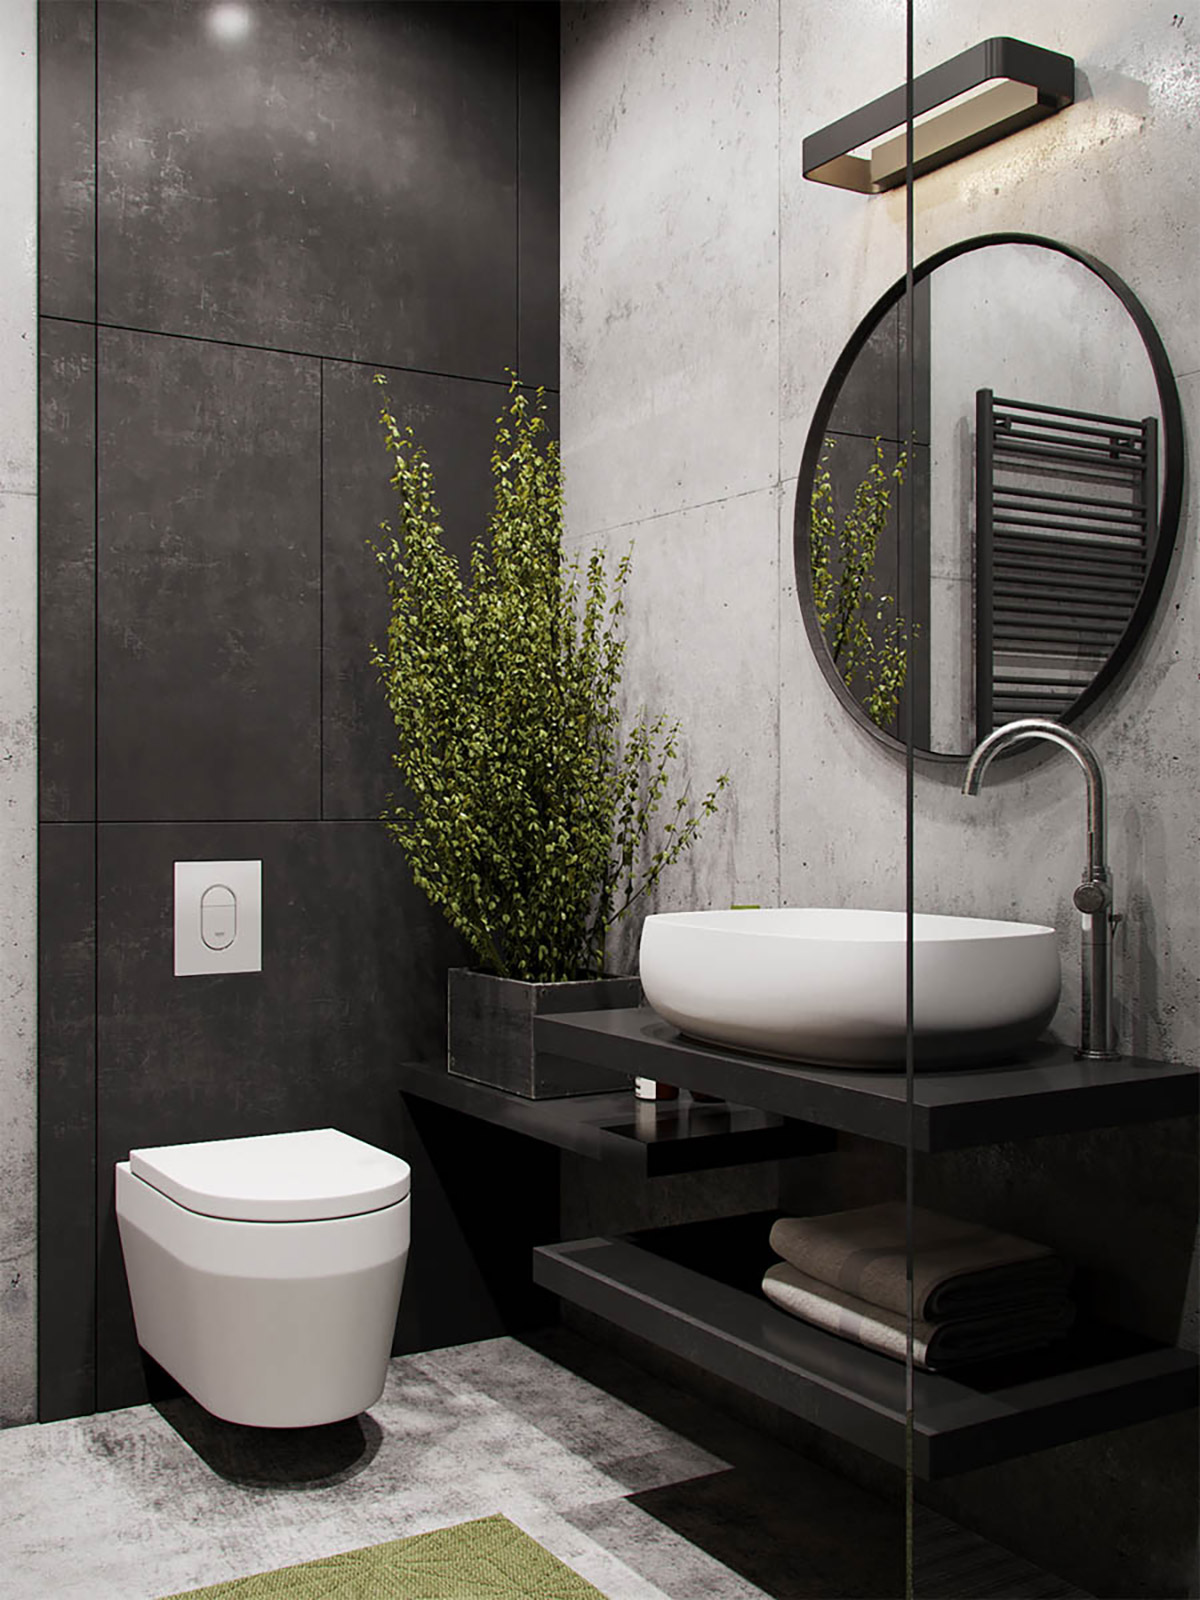 Industrial Style Bathroom Ideas To Glam, Industrial Floating Shelves Bathroom Designs 2018